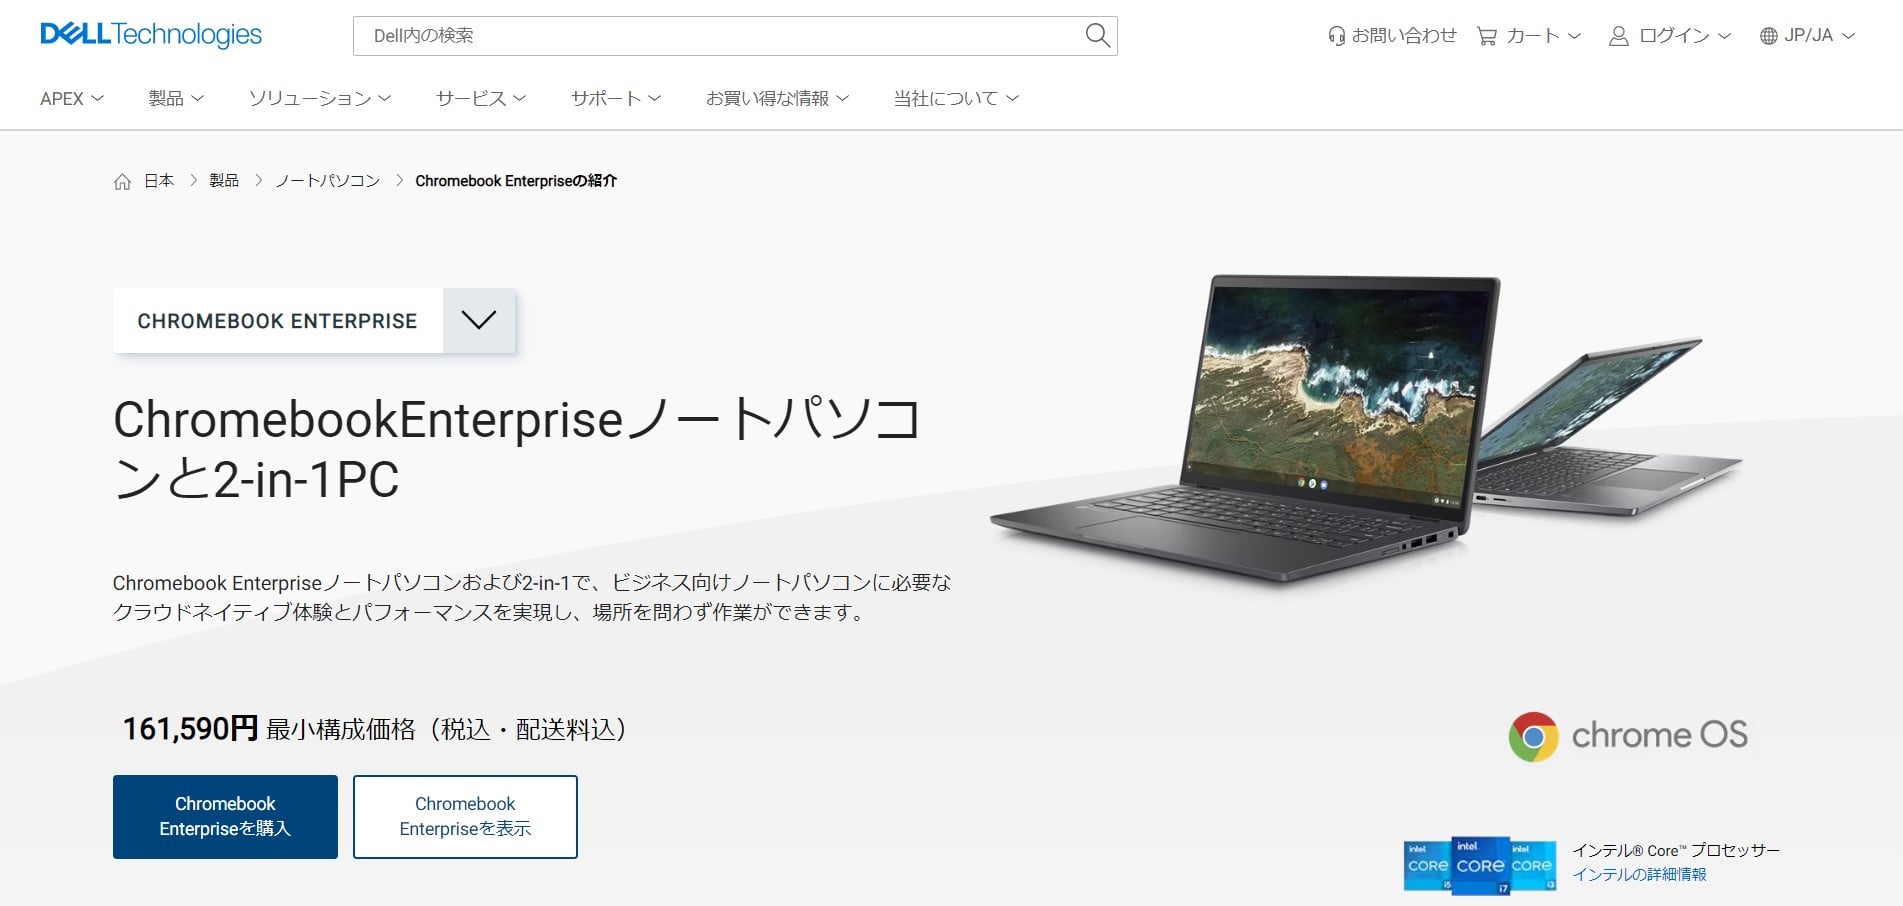 Chromebook Enterprise